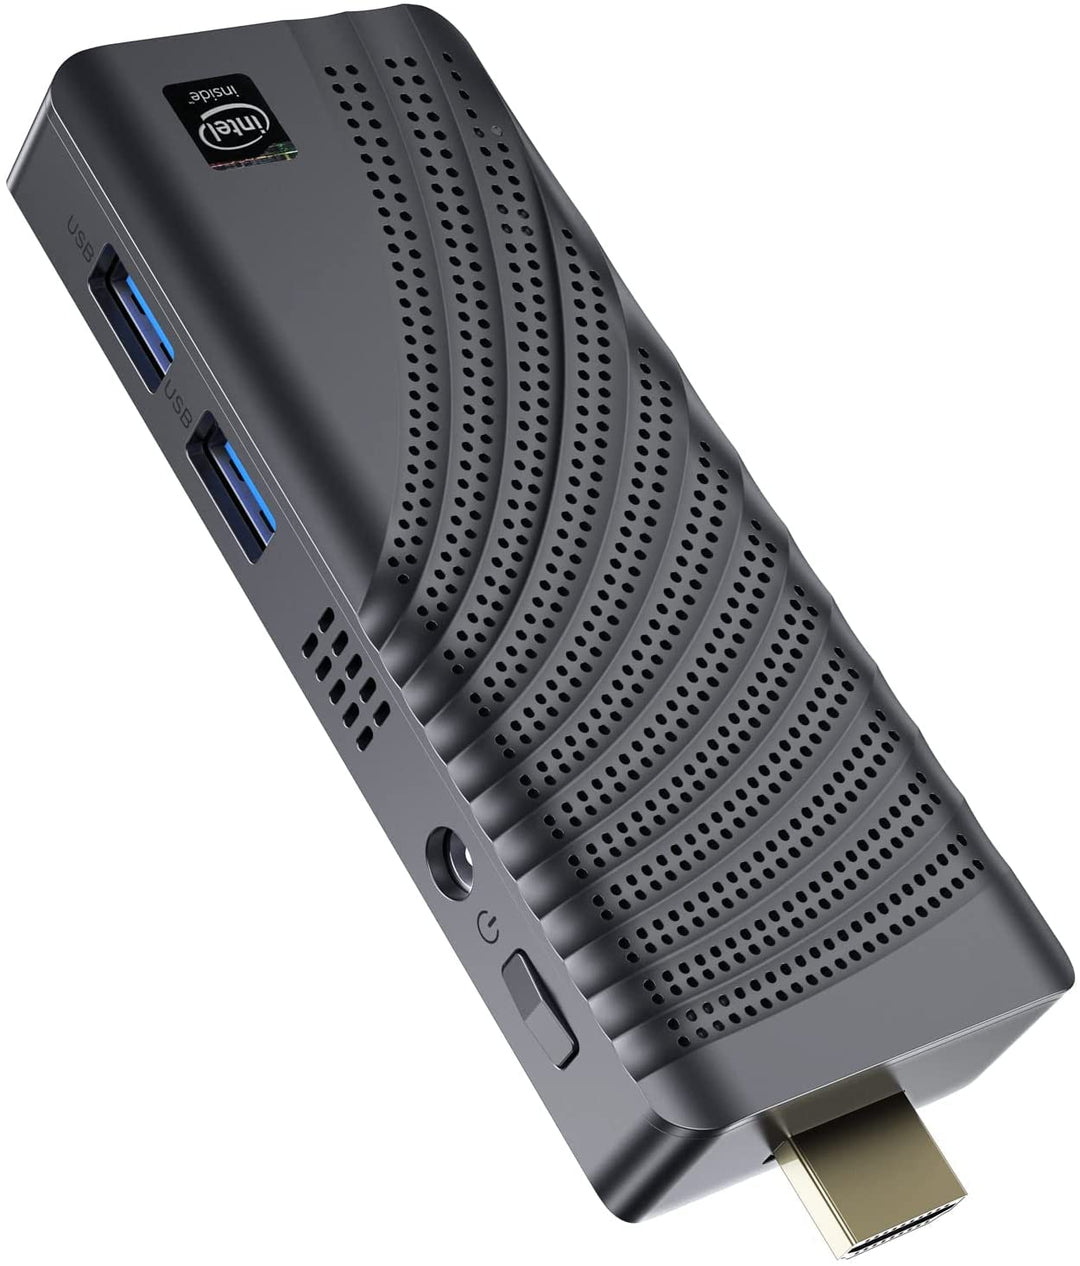 NiPoGi T6P1 スティックpc Windows10 Pro ミニpc インテル Celeron N4000（最大2.6GHz）mini pc 4GB DDR4 64GB eMMC ミニパソコン 4K HDMI 自動電源オン 2.4G / 5G WiFi Bluetooth4.2 ポケットサイズ 軽量 省電力 小型pc